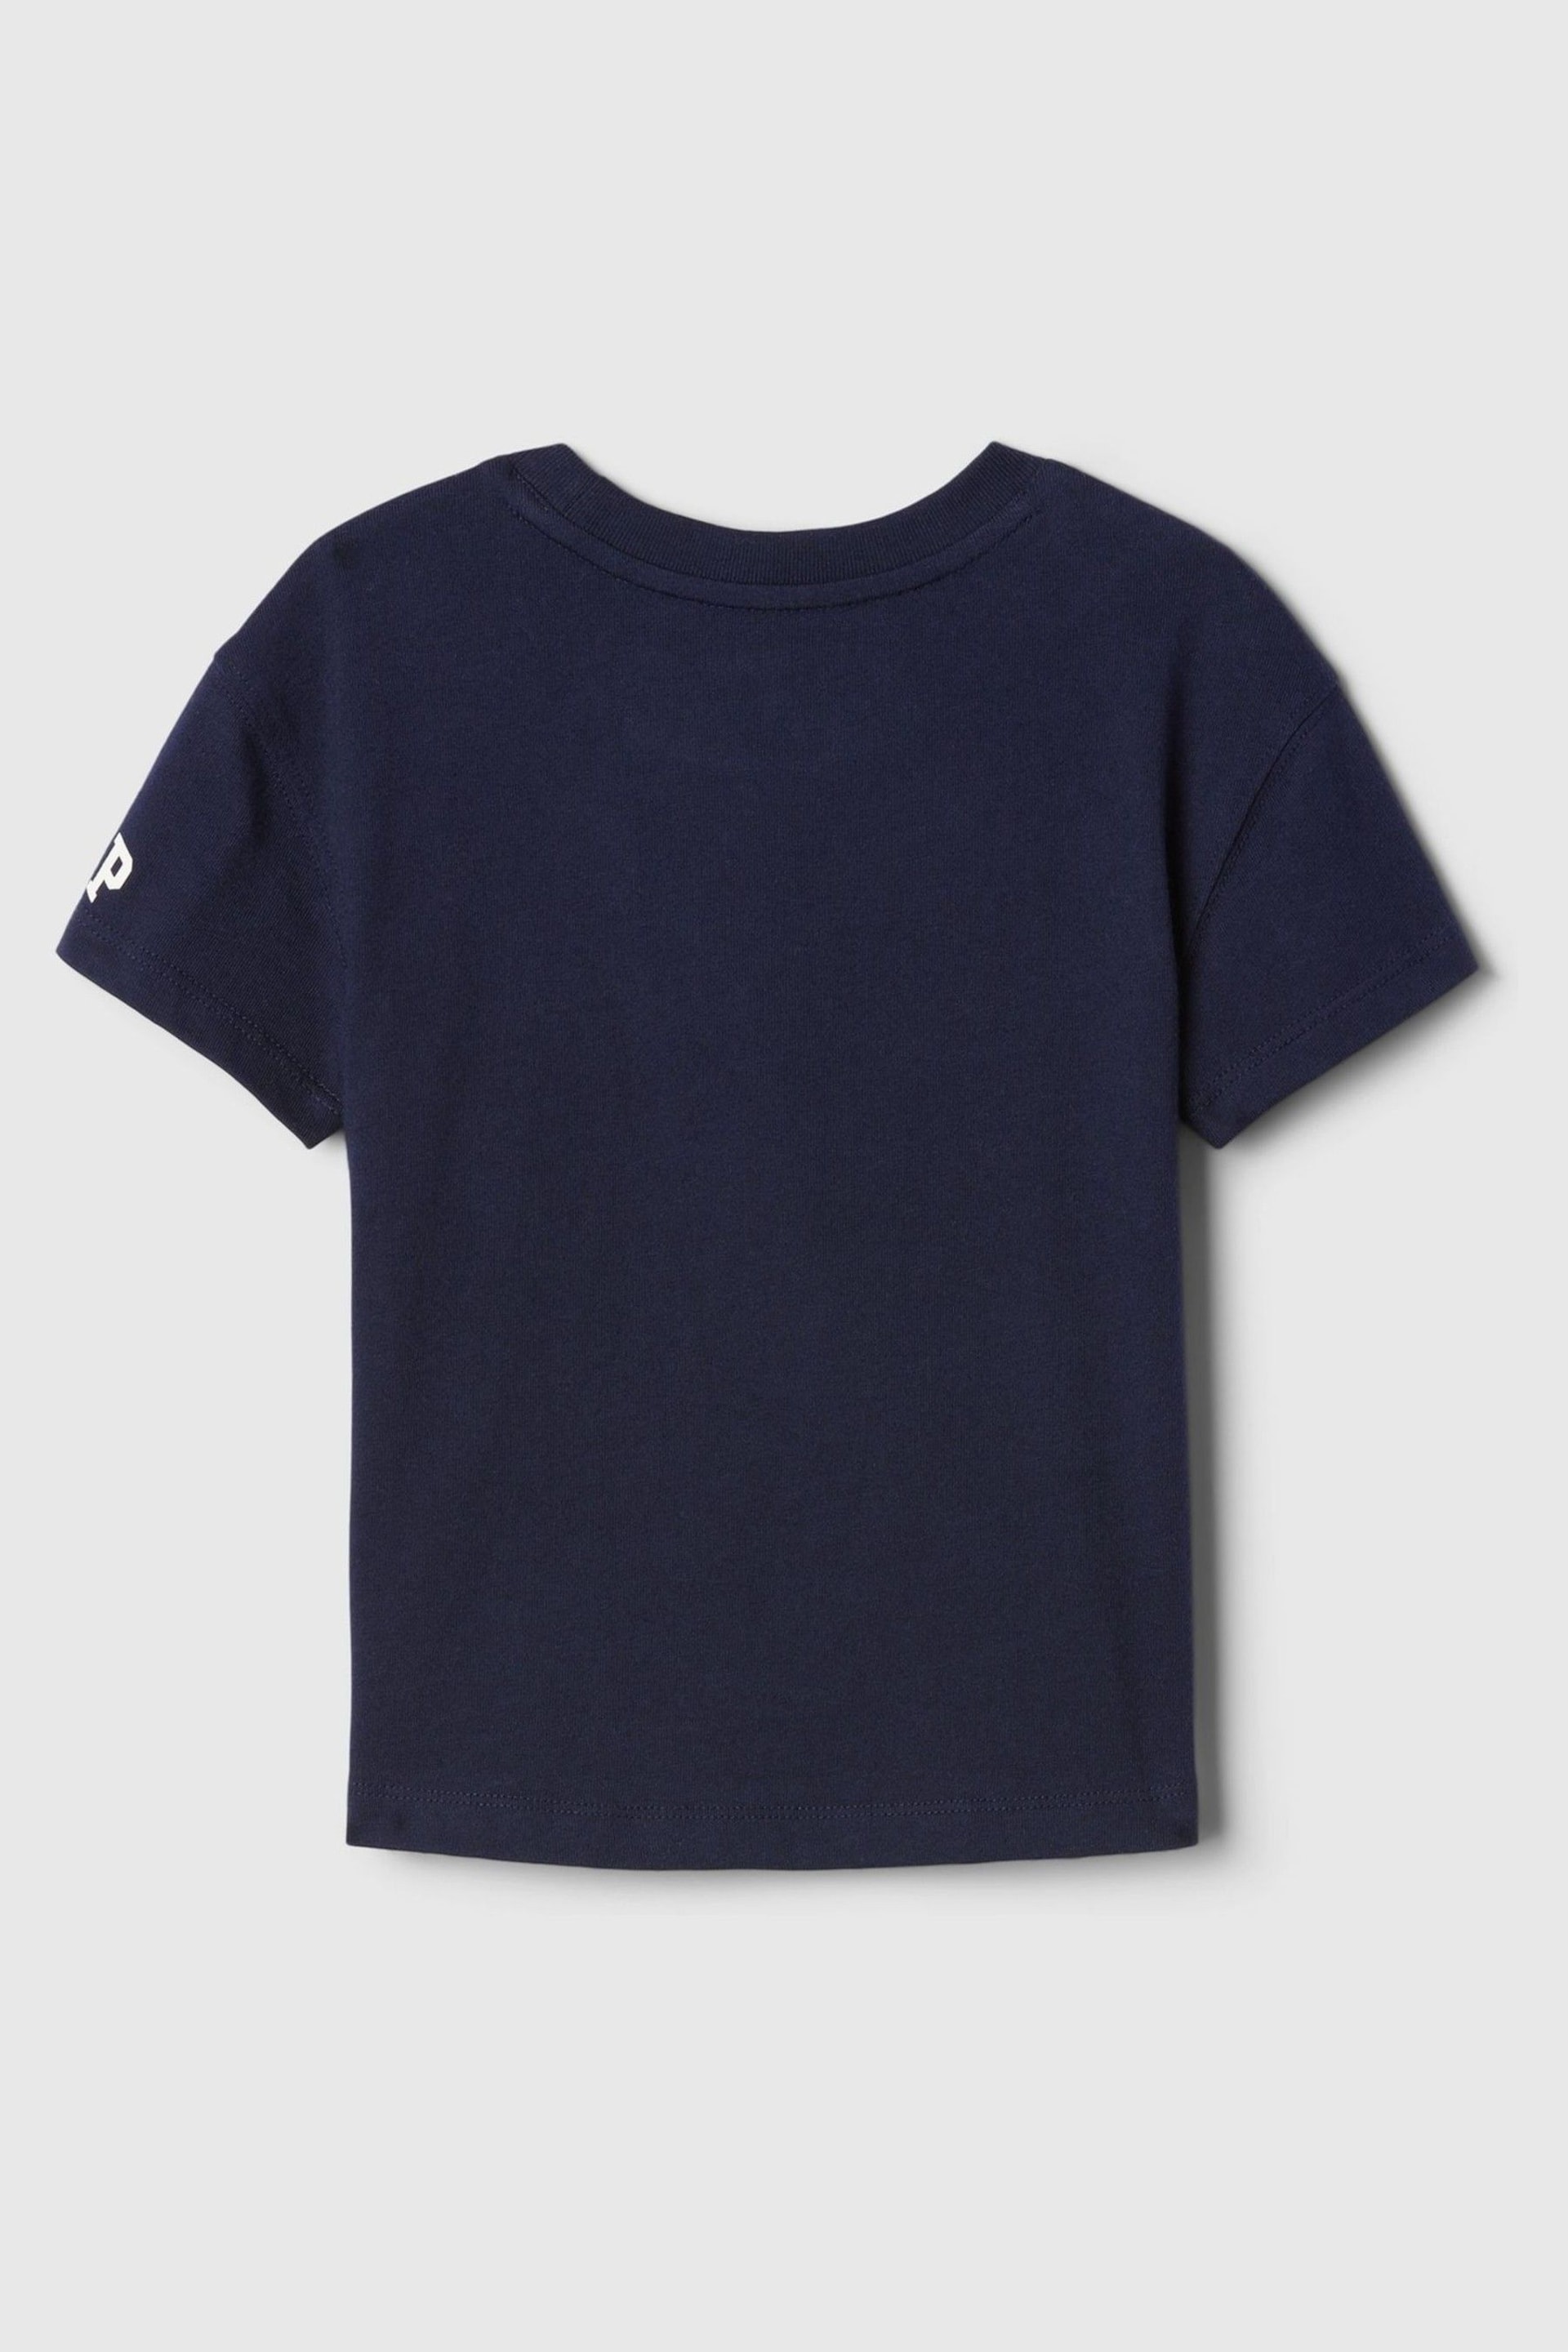 Gap Blue Cars Cotton Disney Graphic Short Sleeve T-Shirt (12mths-5yrs) - Image 2 of 2